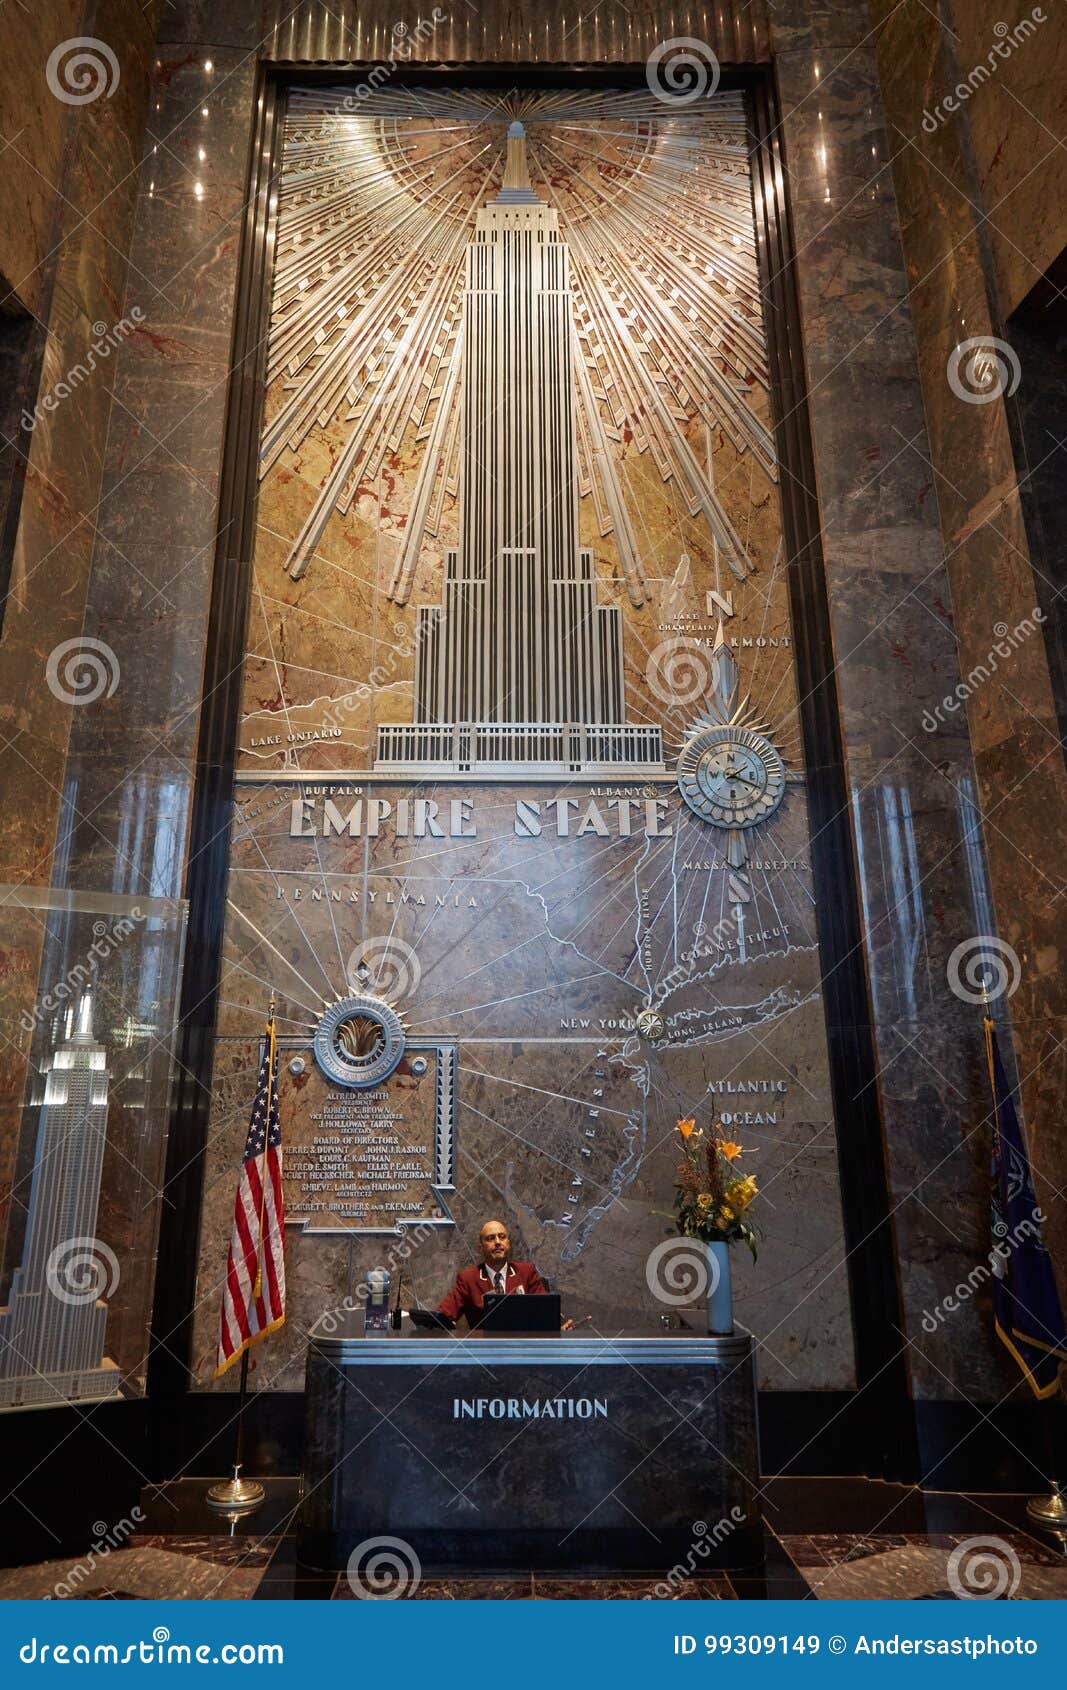 Aleación new york empire state building para casa oficina decoración del escritorio 